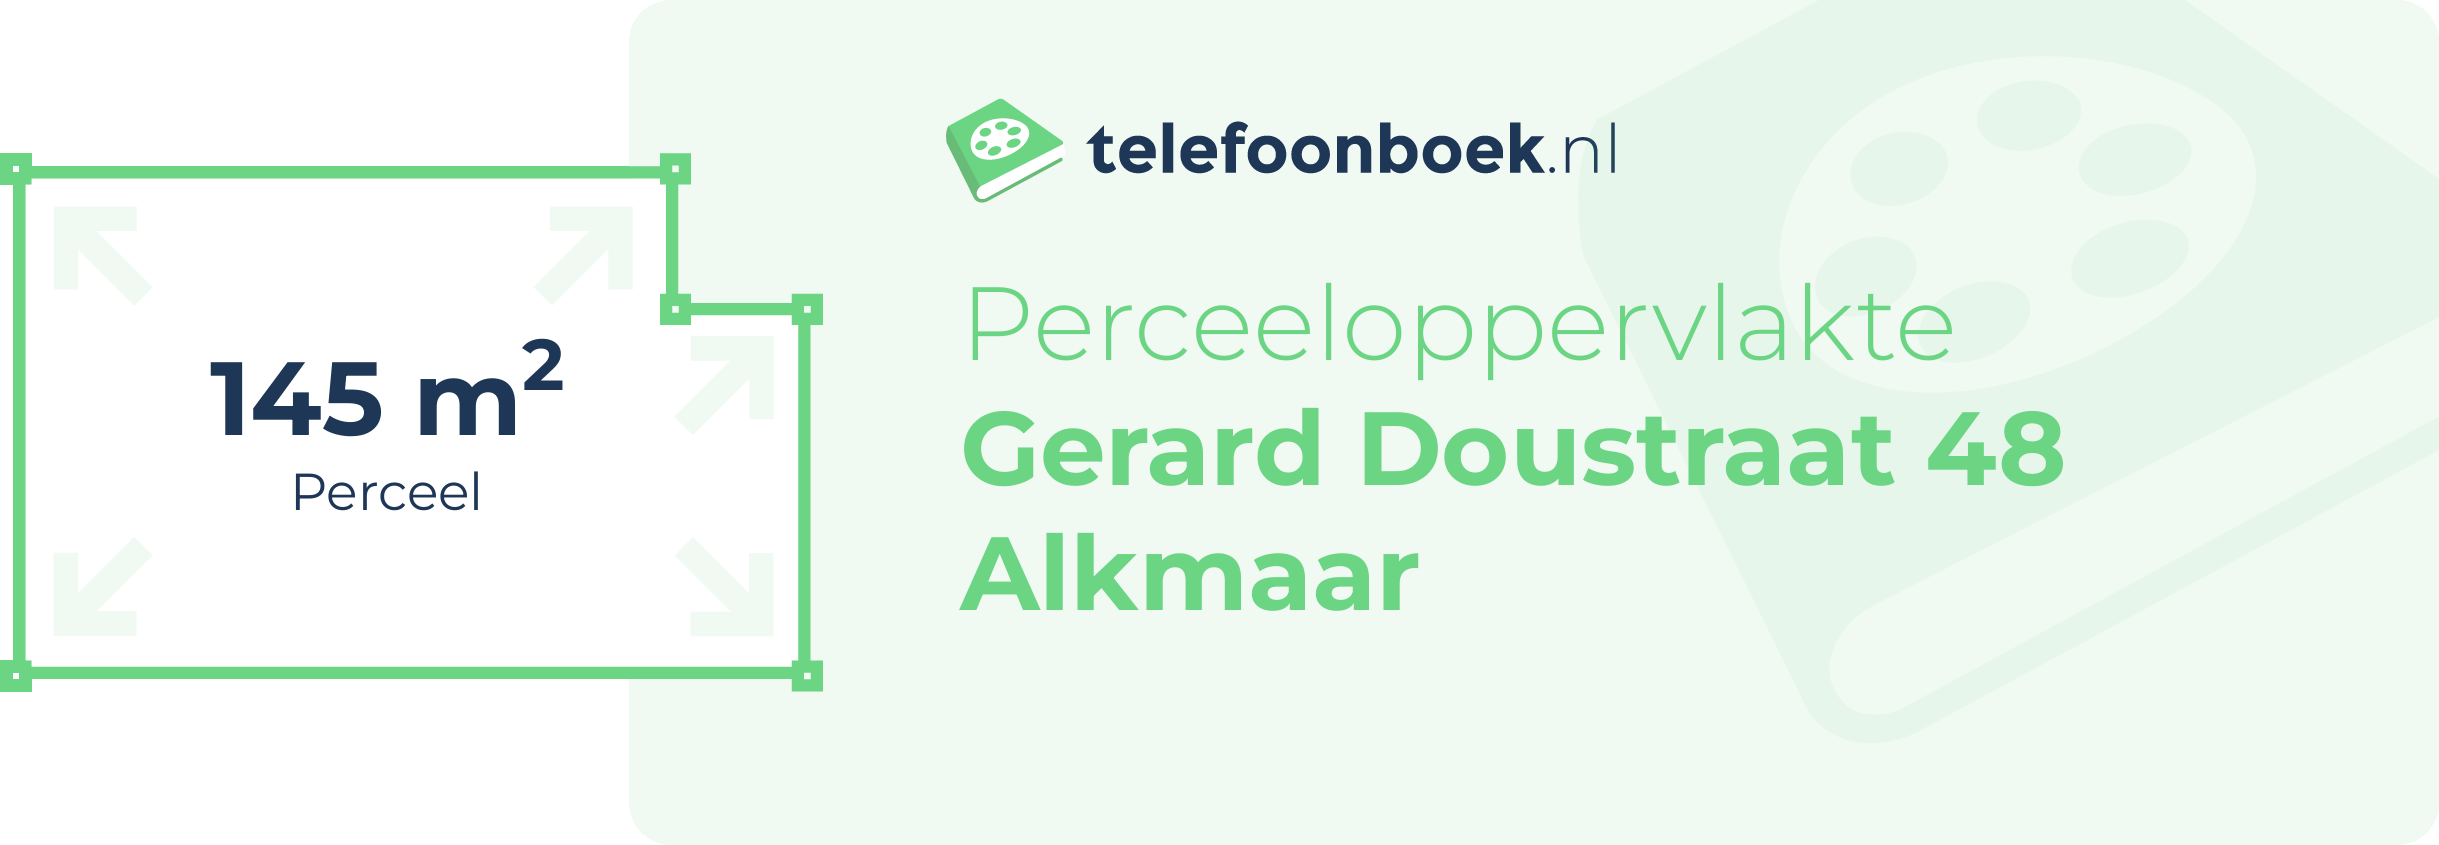 Perceeloppervlakte Gerard Doustraat 48 Alkmaar